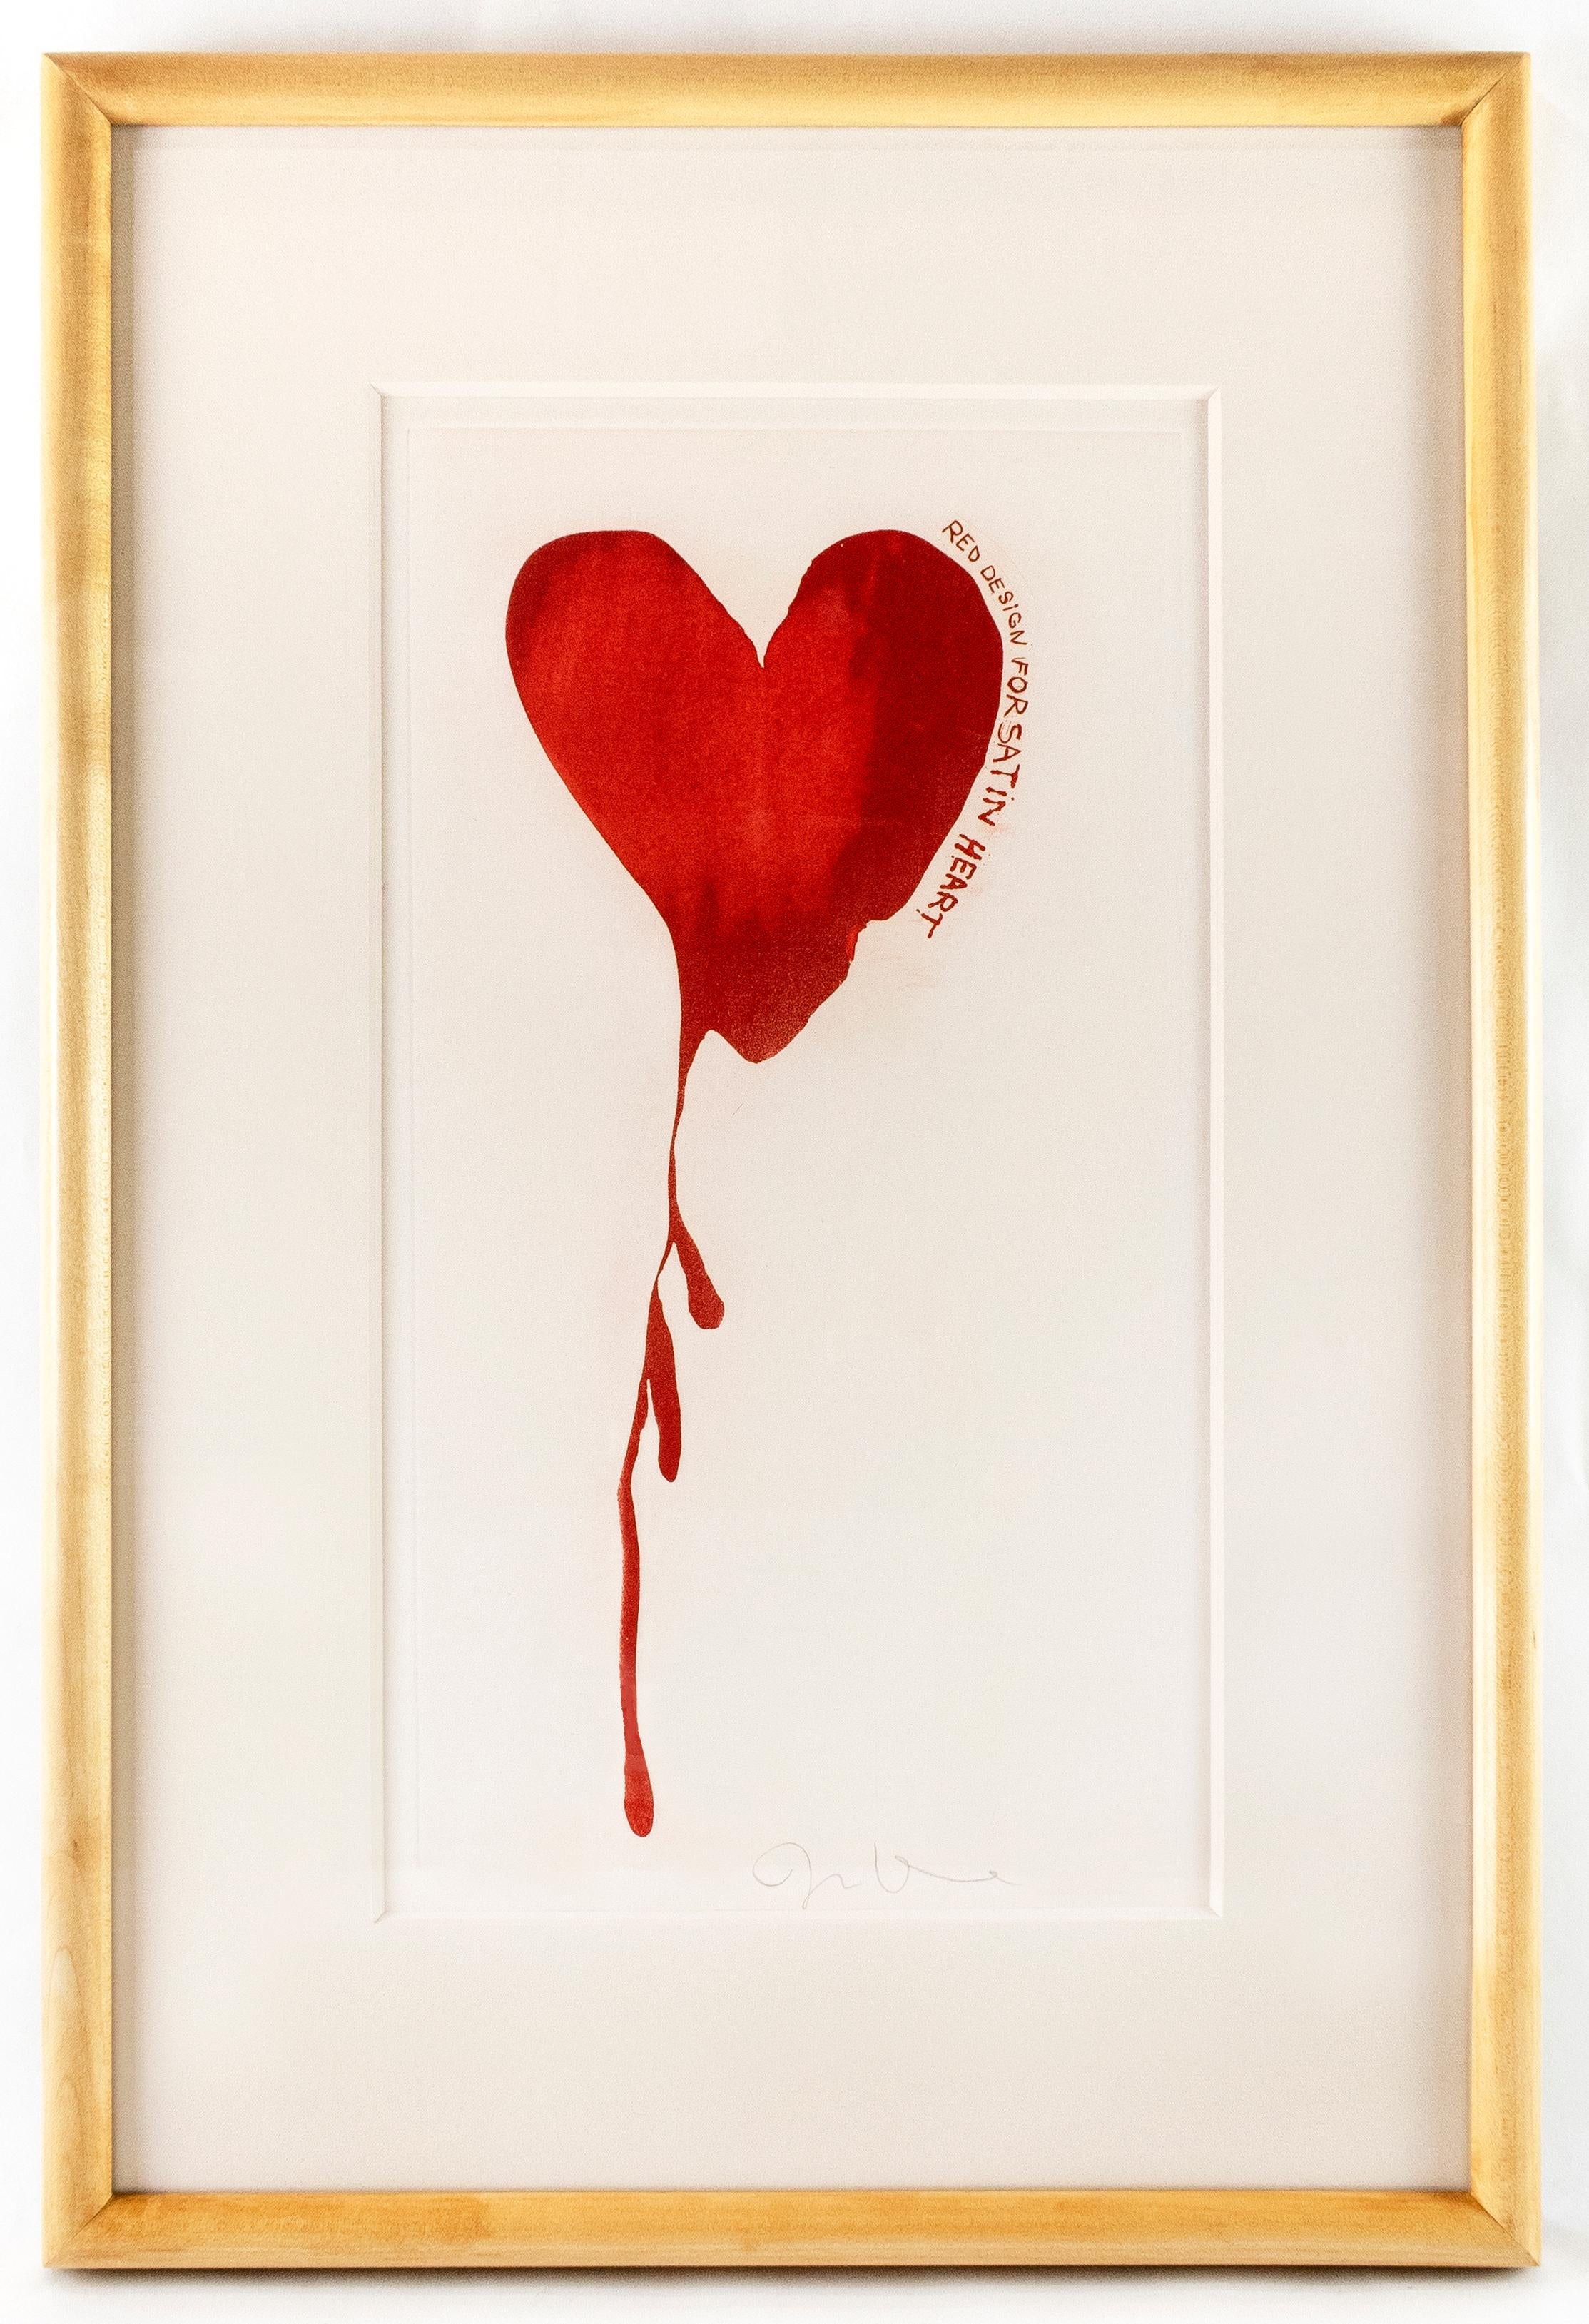 FRAMED Red Design for Satin Heart  - Print by Jim Dine